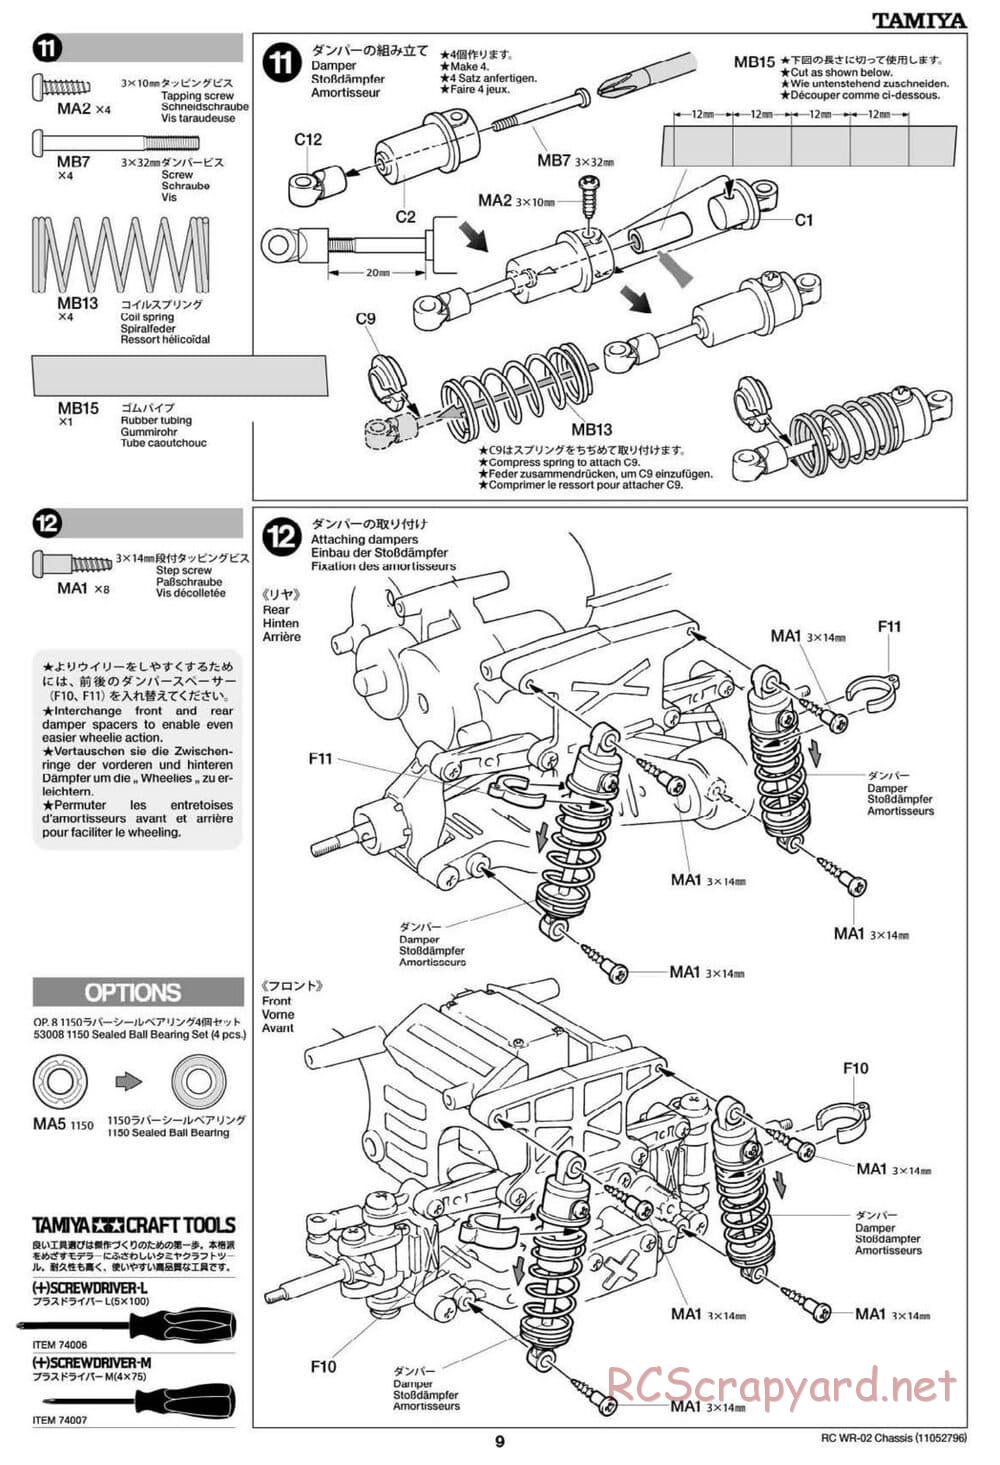 Tamiya - WR-02 Chassis - Manual - Page 9